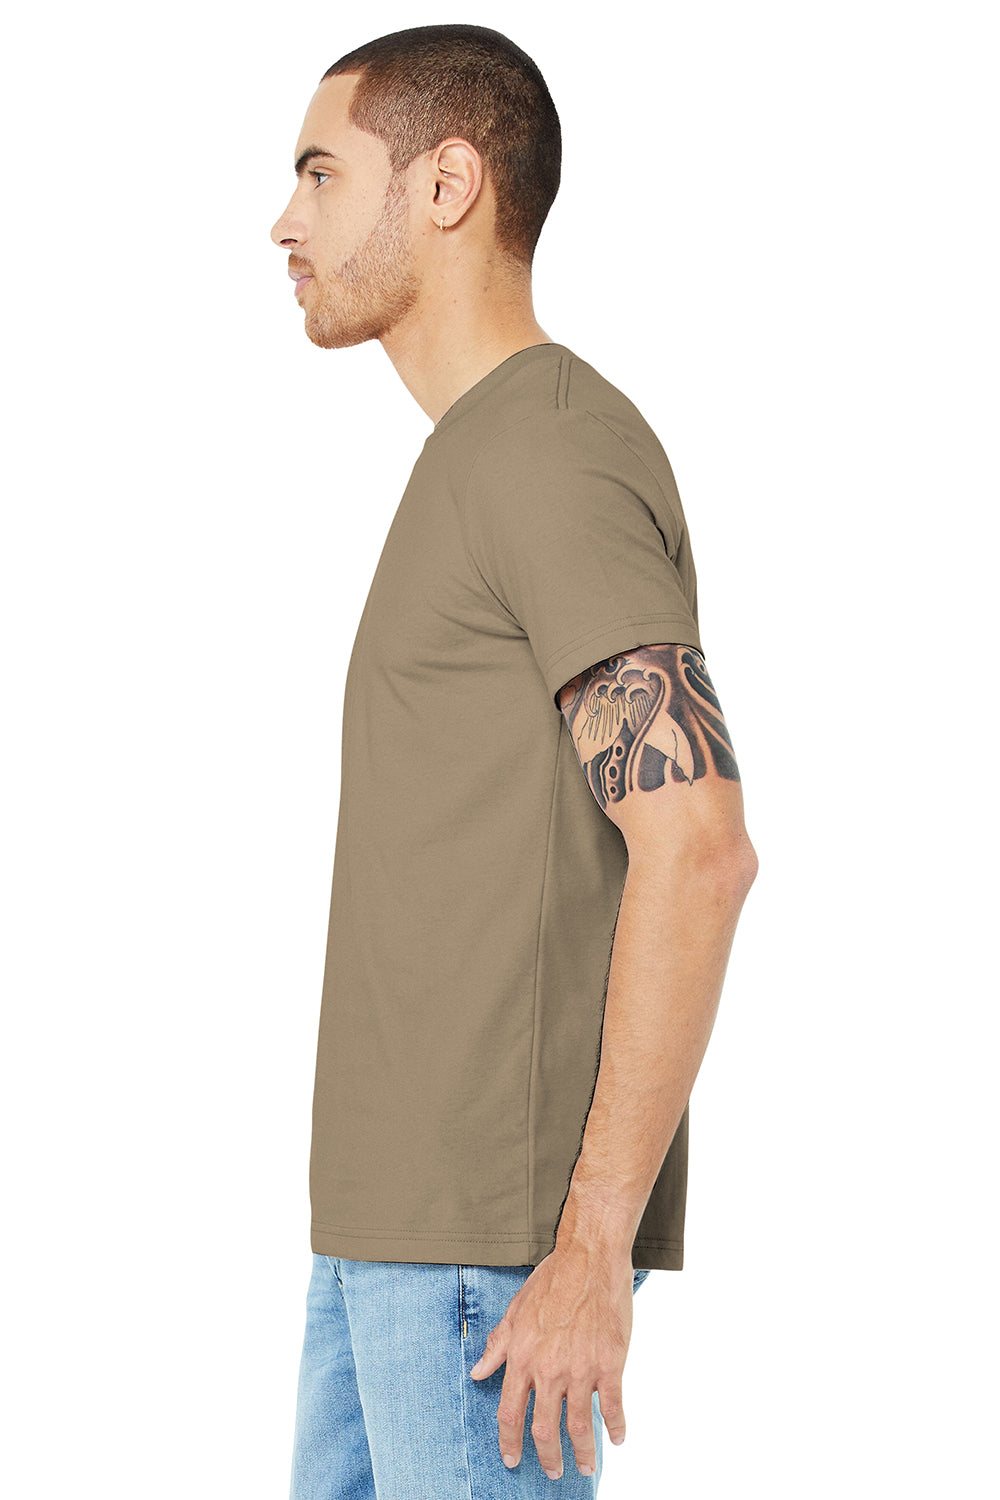 Bella + Canvas BC3001/3001C Mens Jersey Short Sleeve Crewneck T-Shirt Tan Model Side